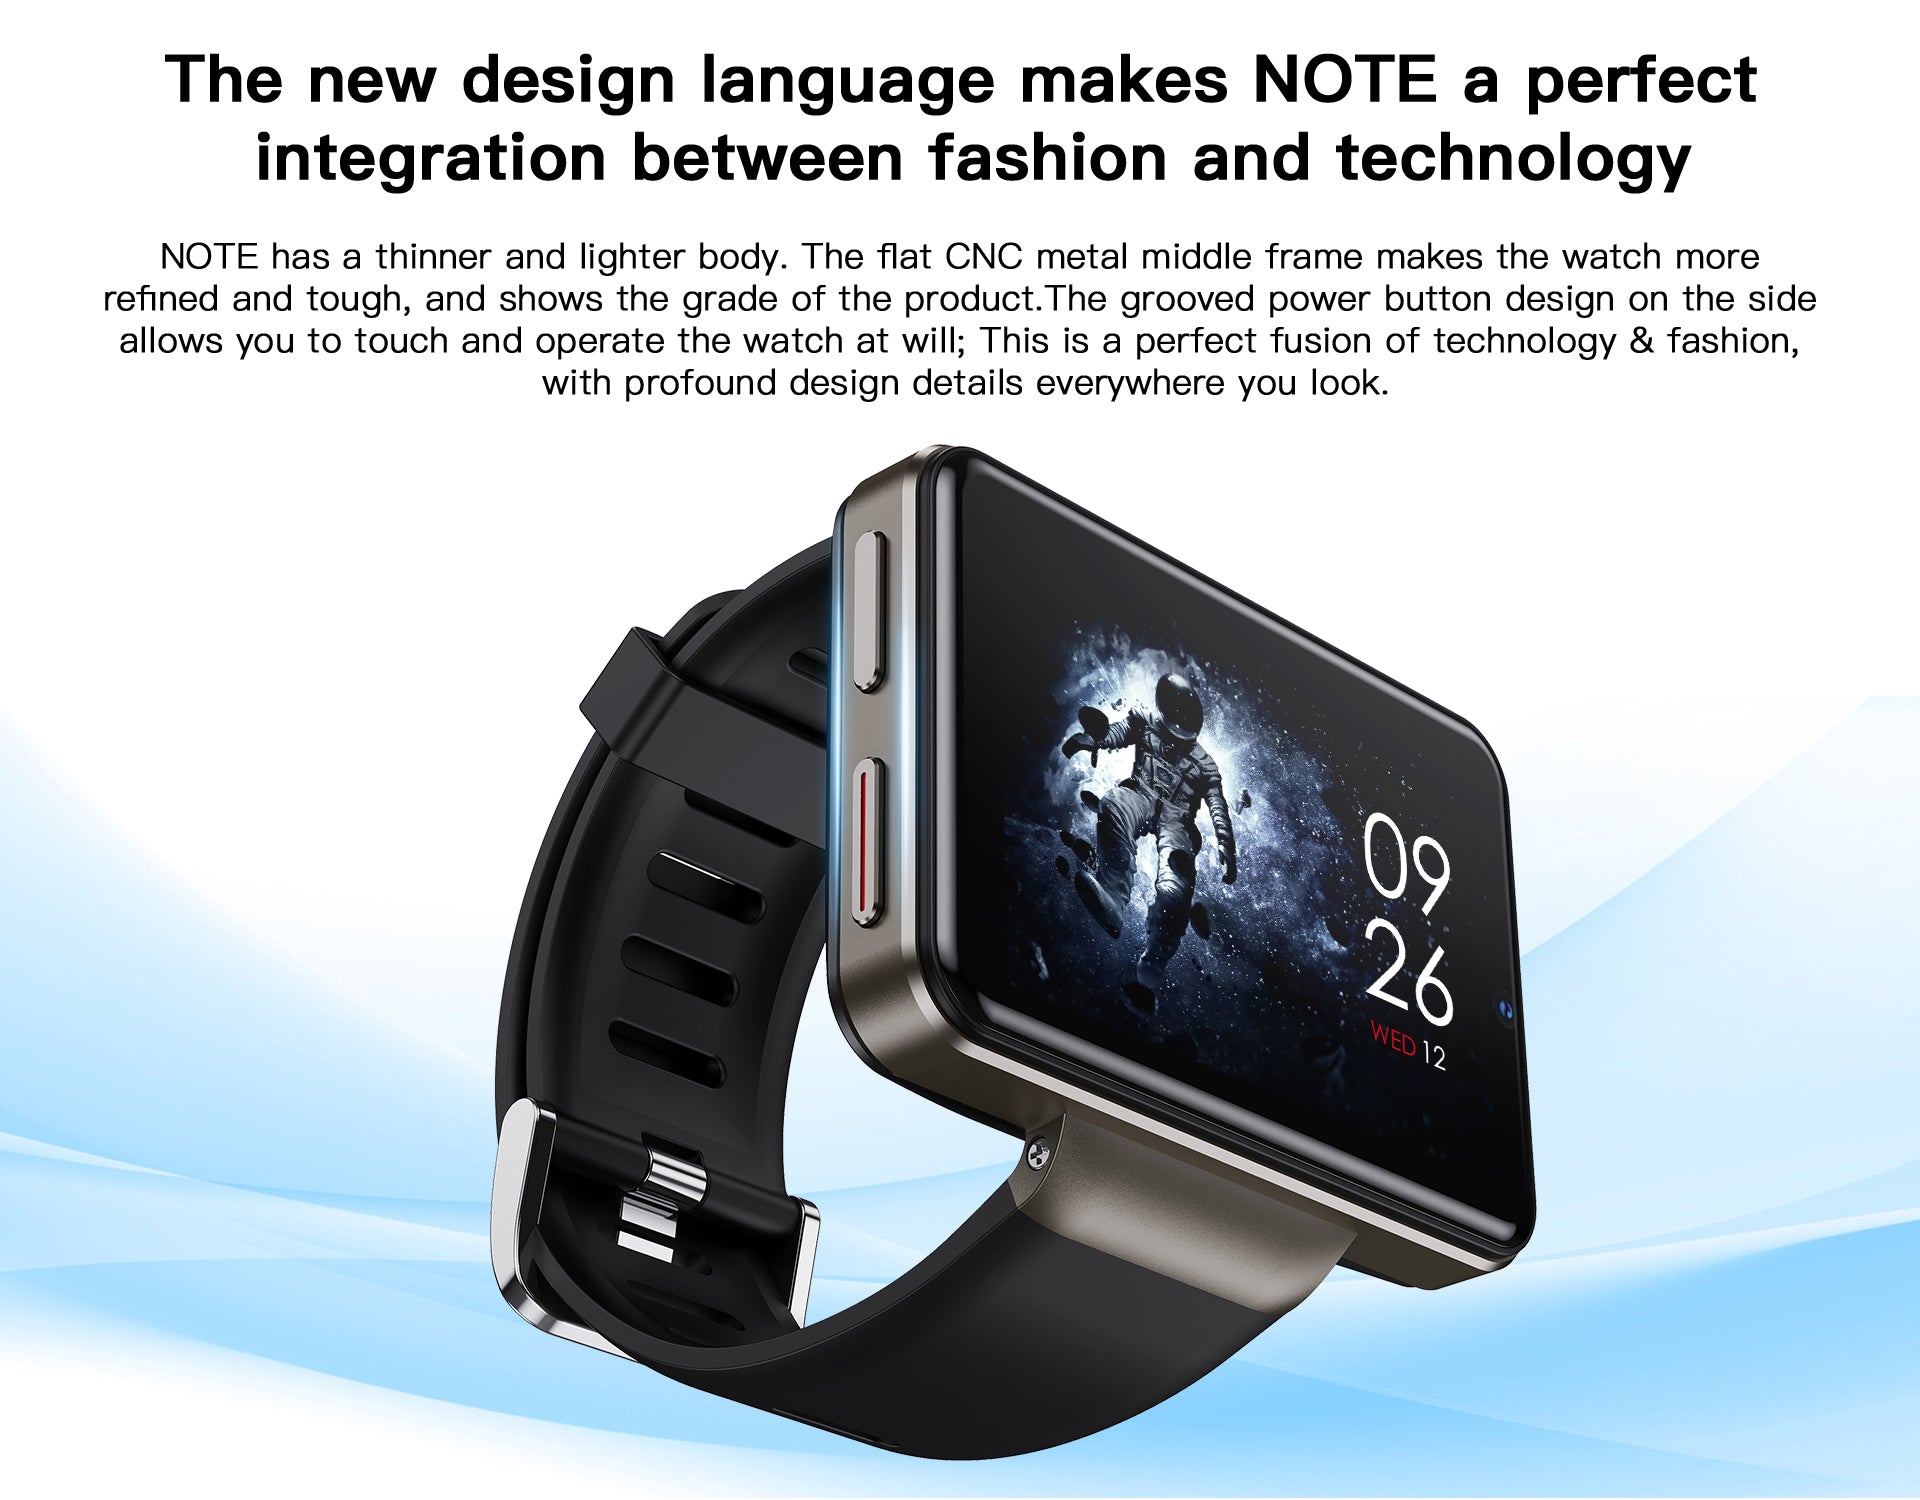 KOSPET NOTE smartwatch with Big Screen Display